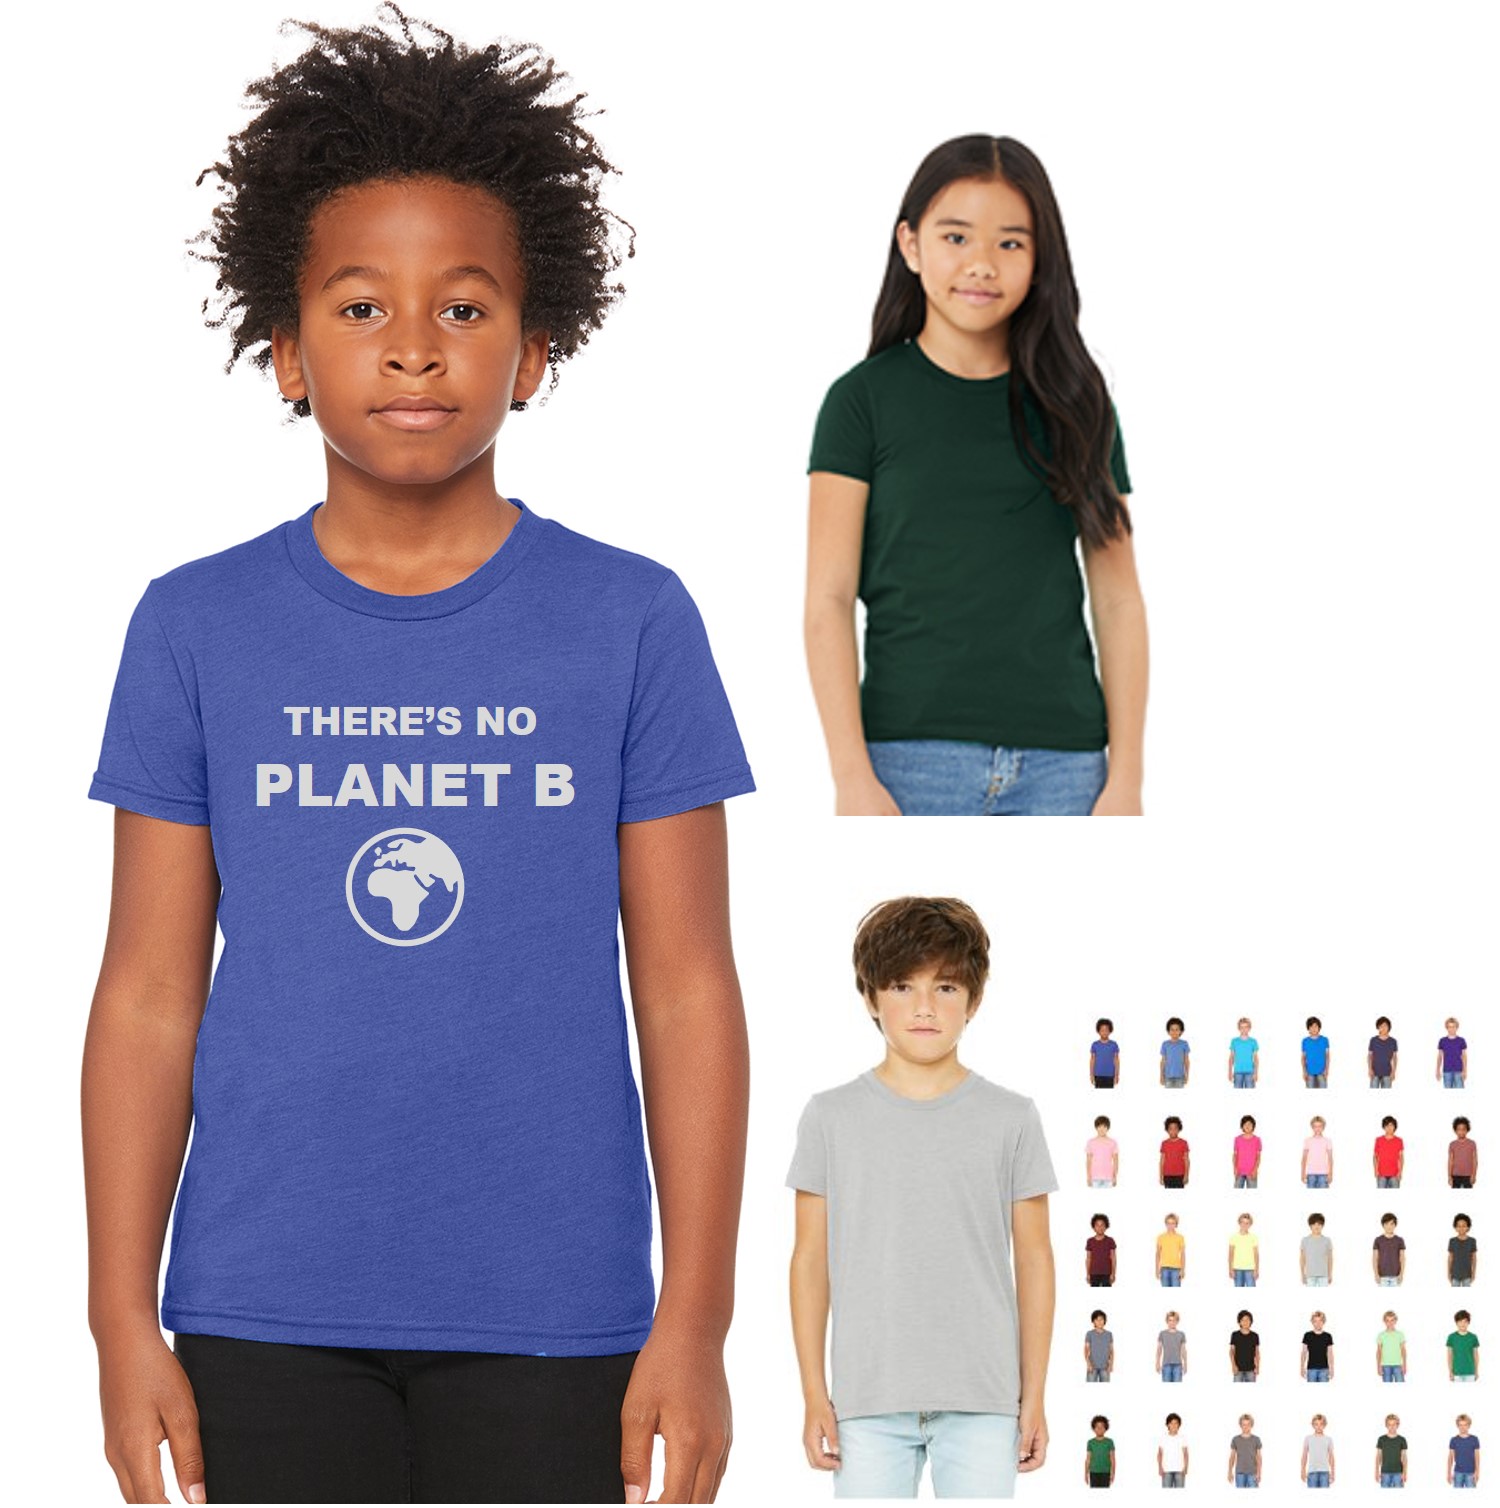 three kid models wearing short-sleeved t-shirts